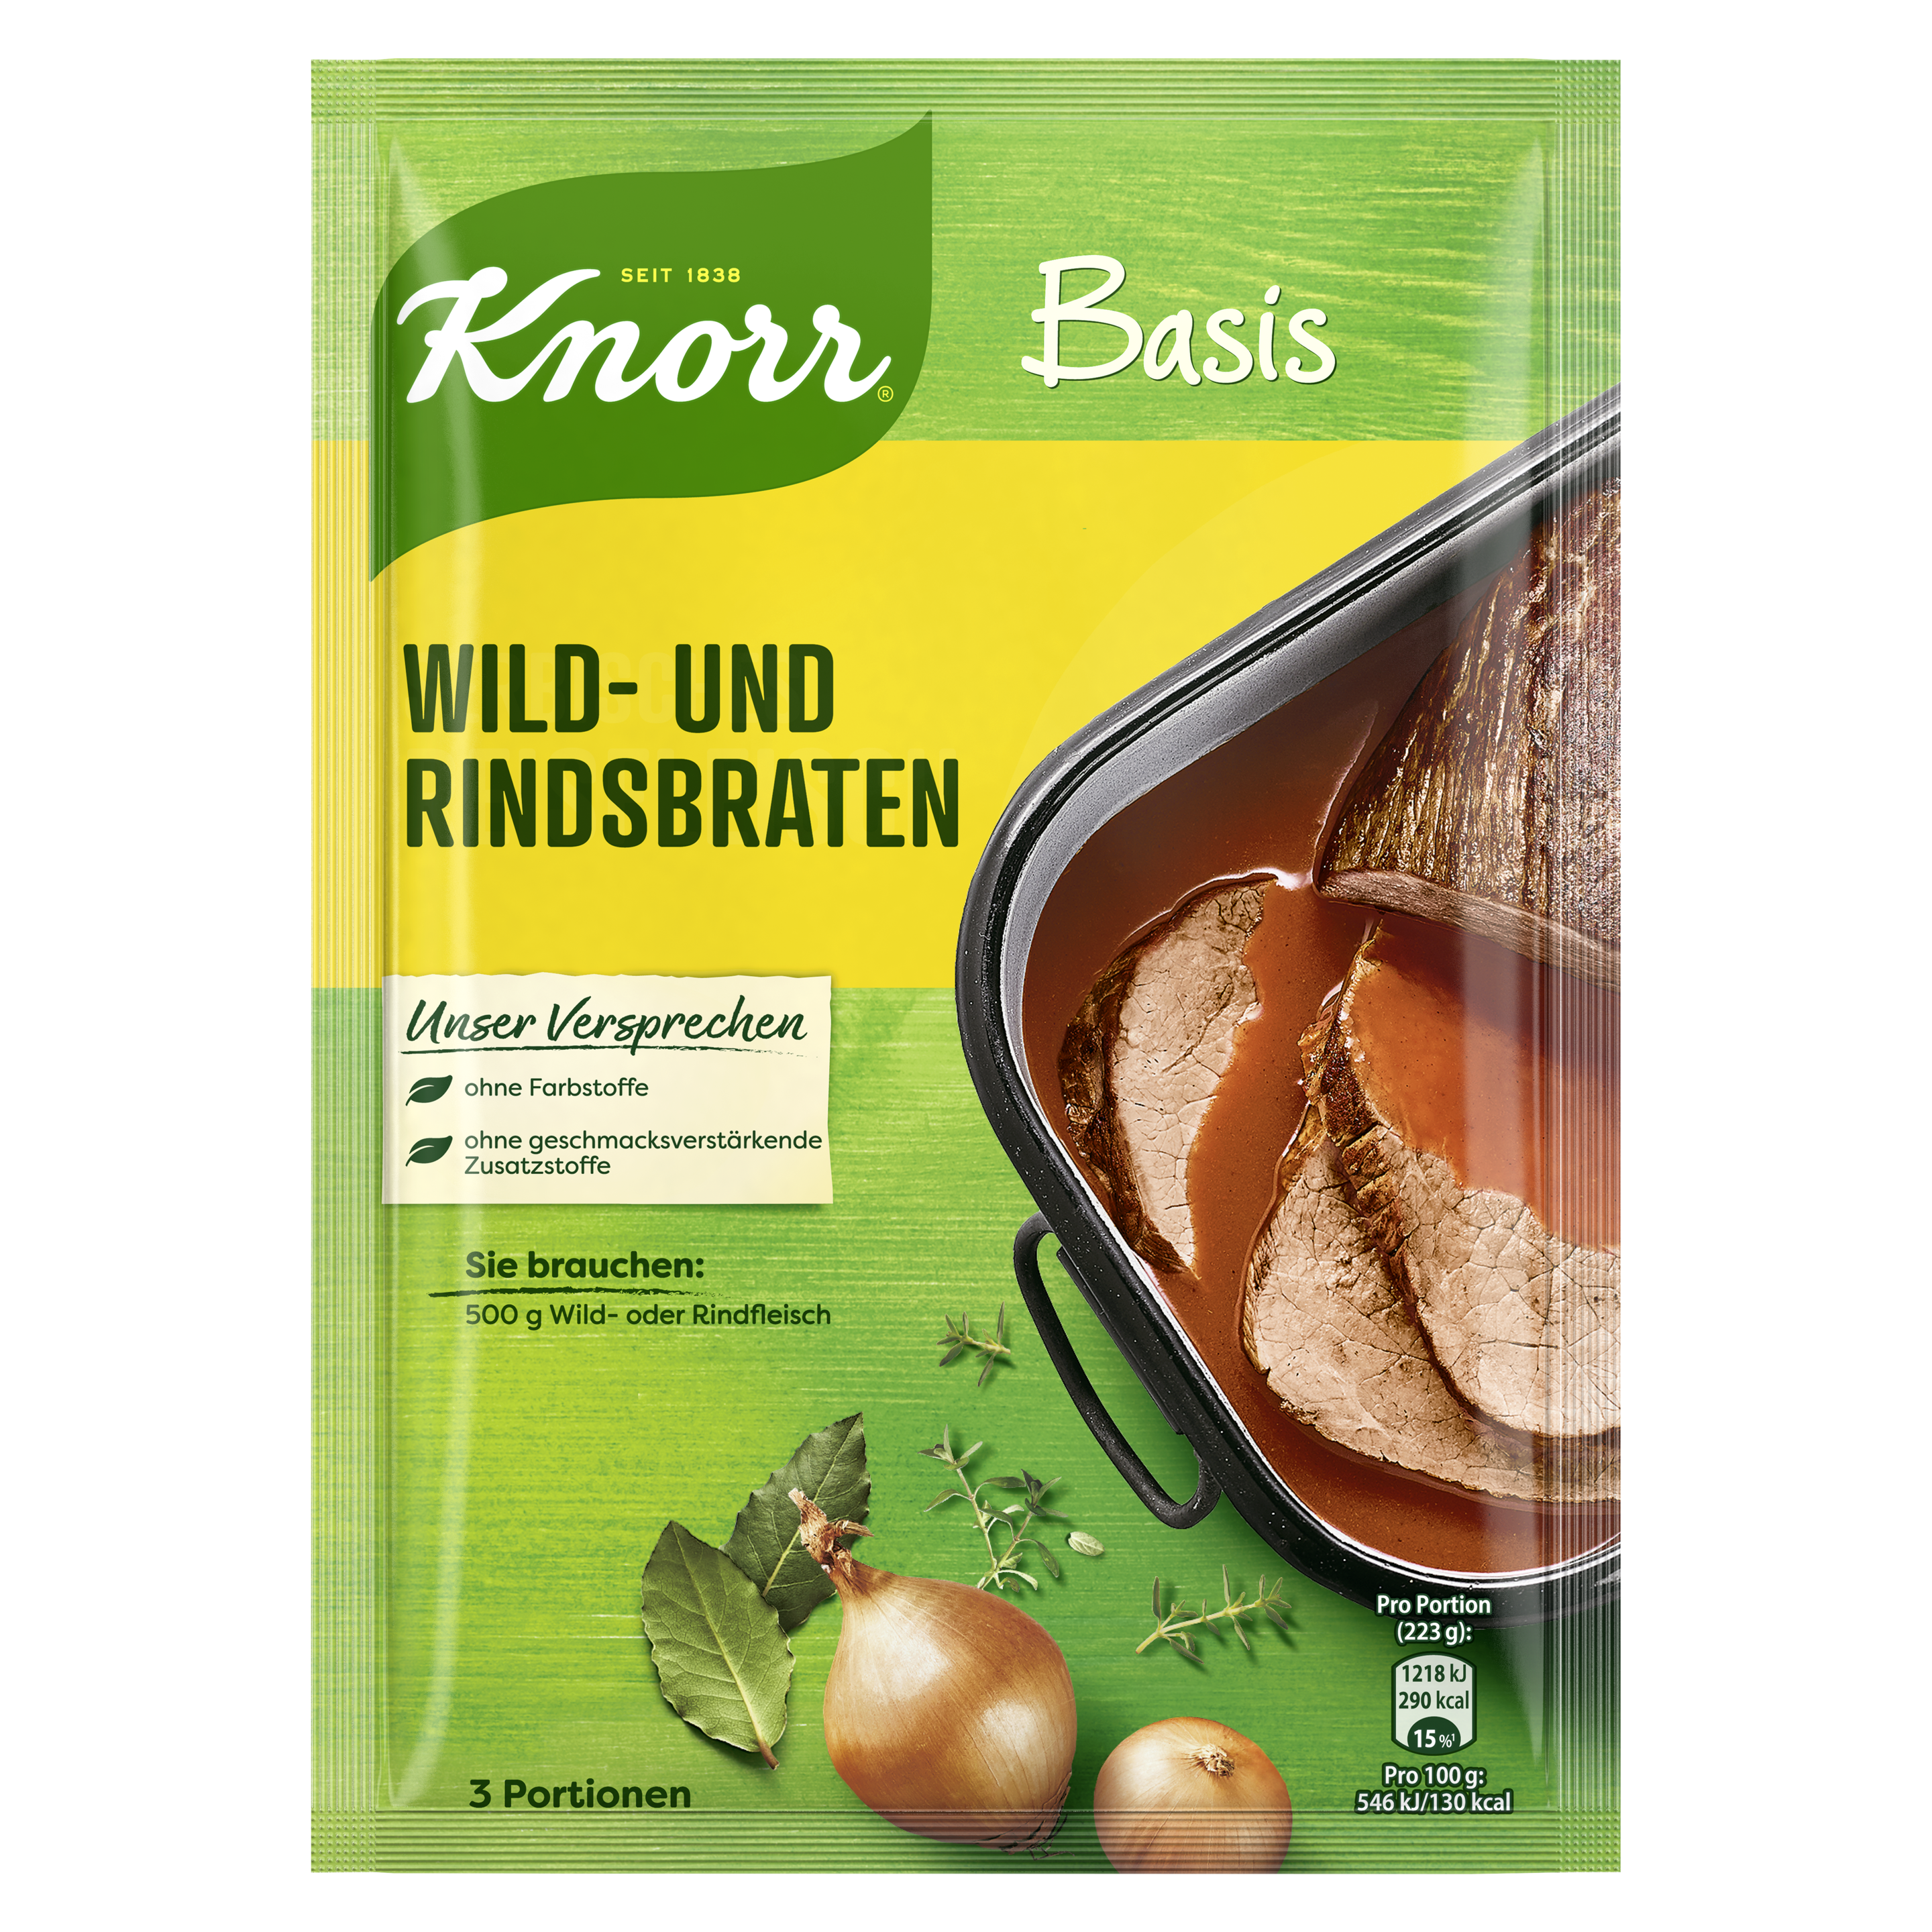 Knorr Basis WildRindsbraten 18x 44g  BT AT